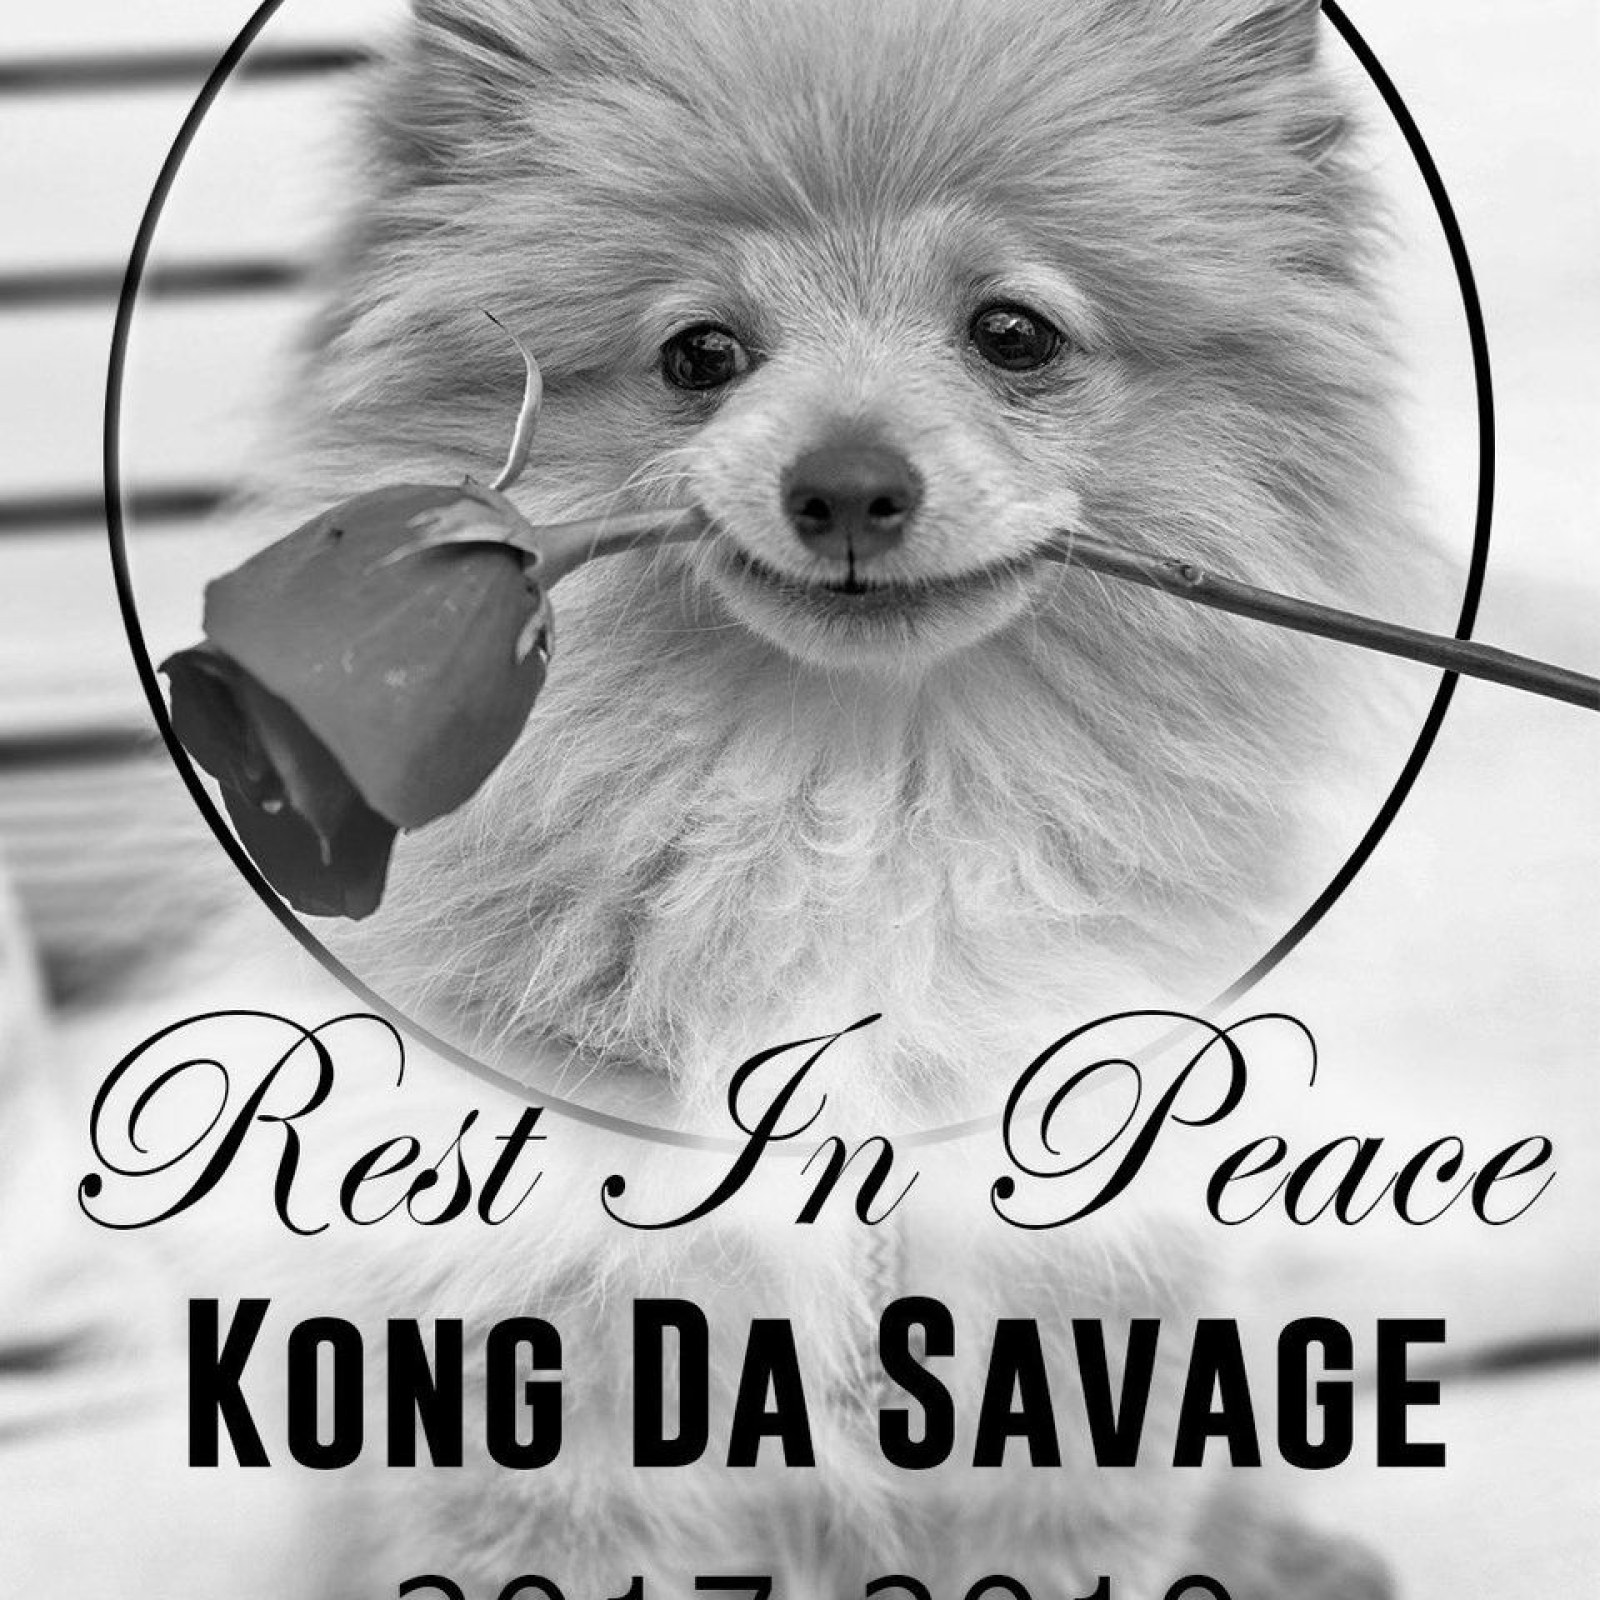 Logan Paul S Dog Kong Da Savage Has Passed Away After Altercation